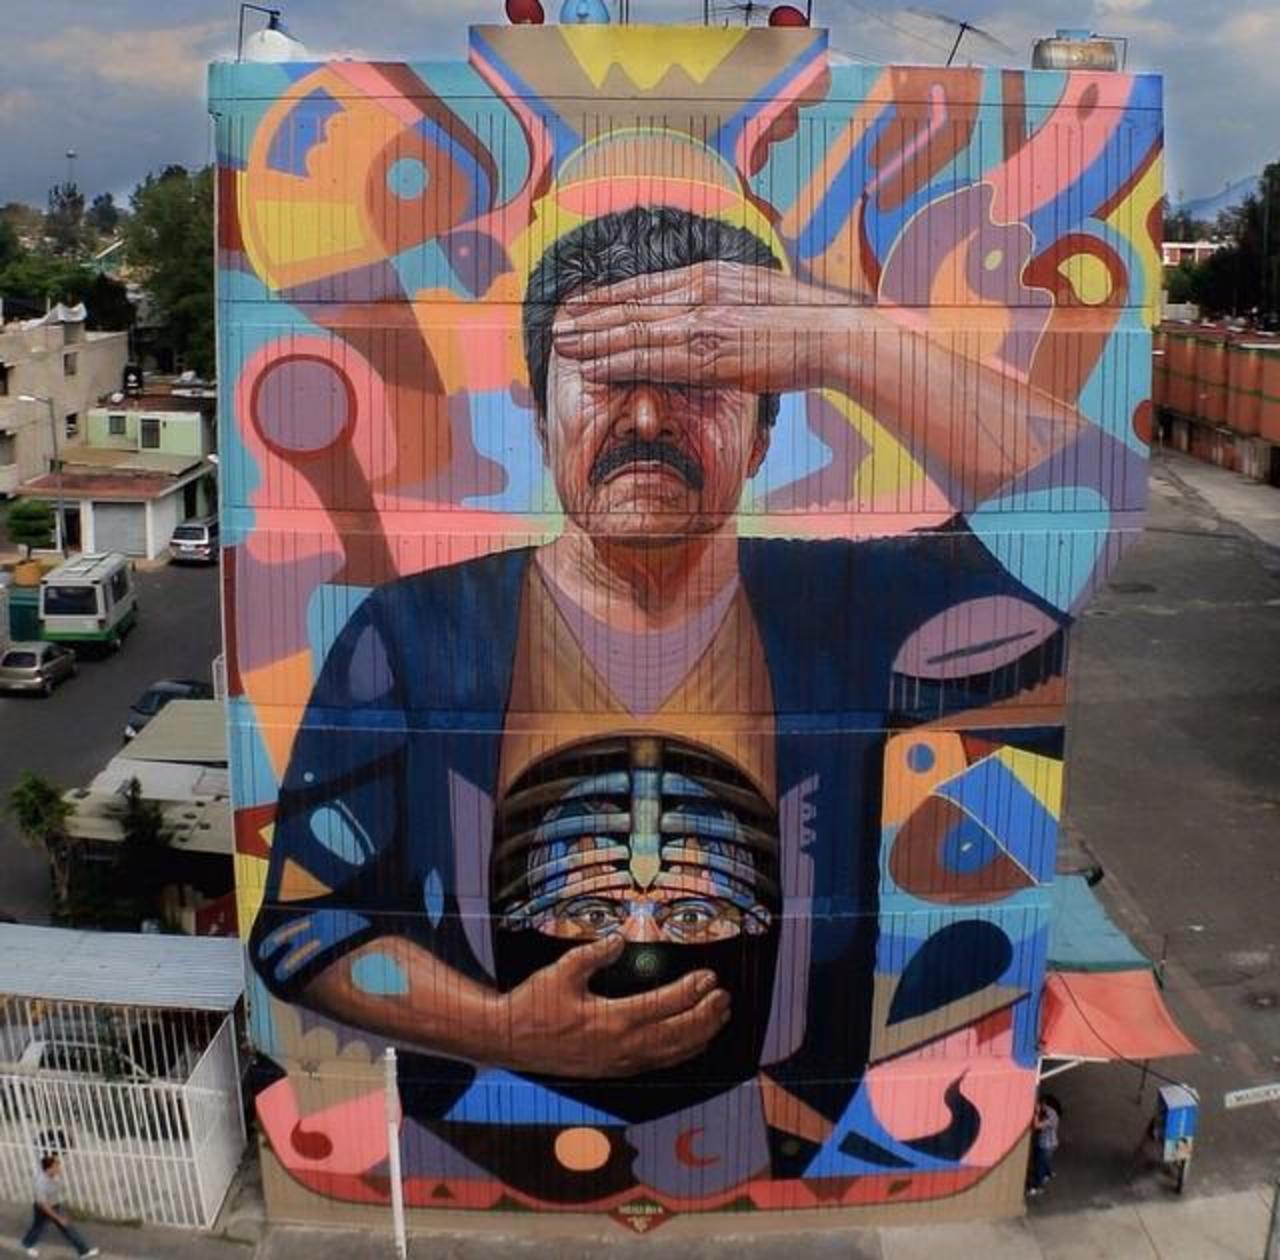 Large scale Street Art by the artist Daniel Cortez 

#art #mural #graffiti #streetart http://t.co/bOjN8r6XR9